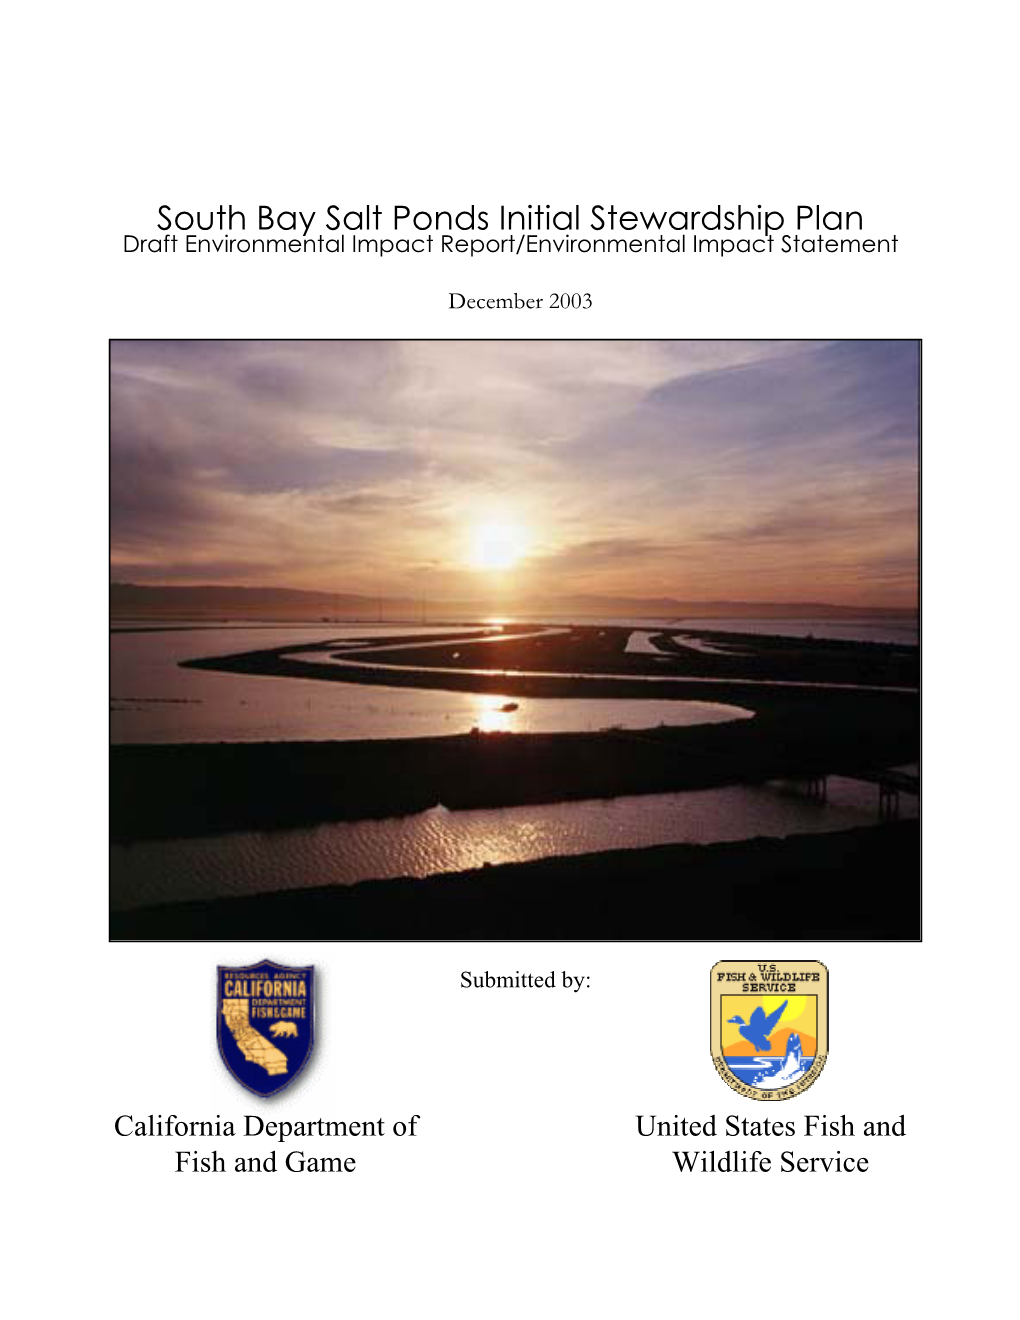 South Bay Salt Ponds Initial Stewardship Plan Draft Environmental Impact Report/Environmental Impact Statement